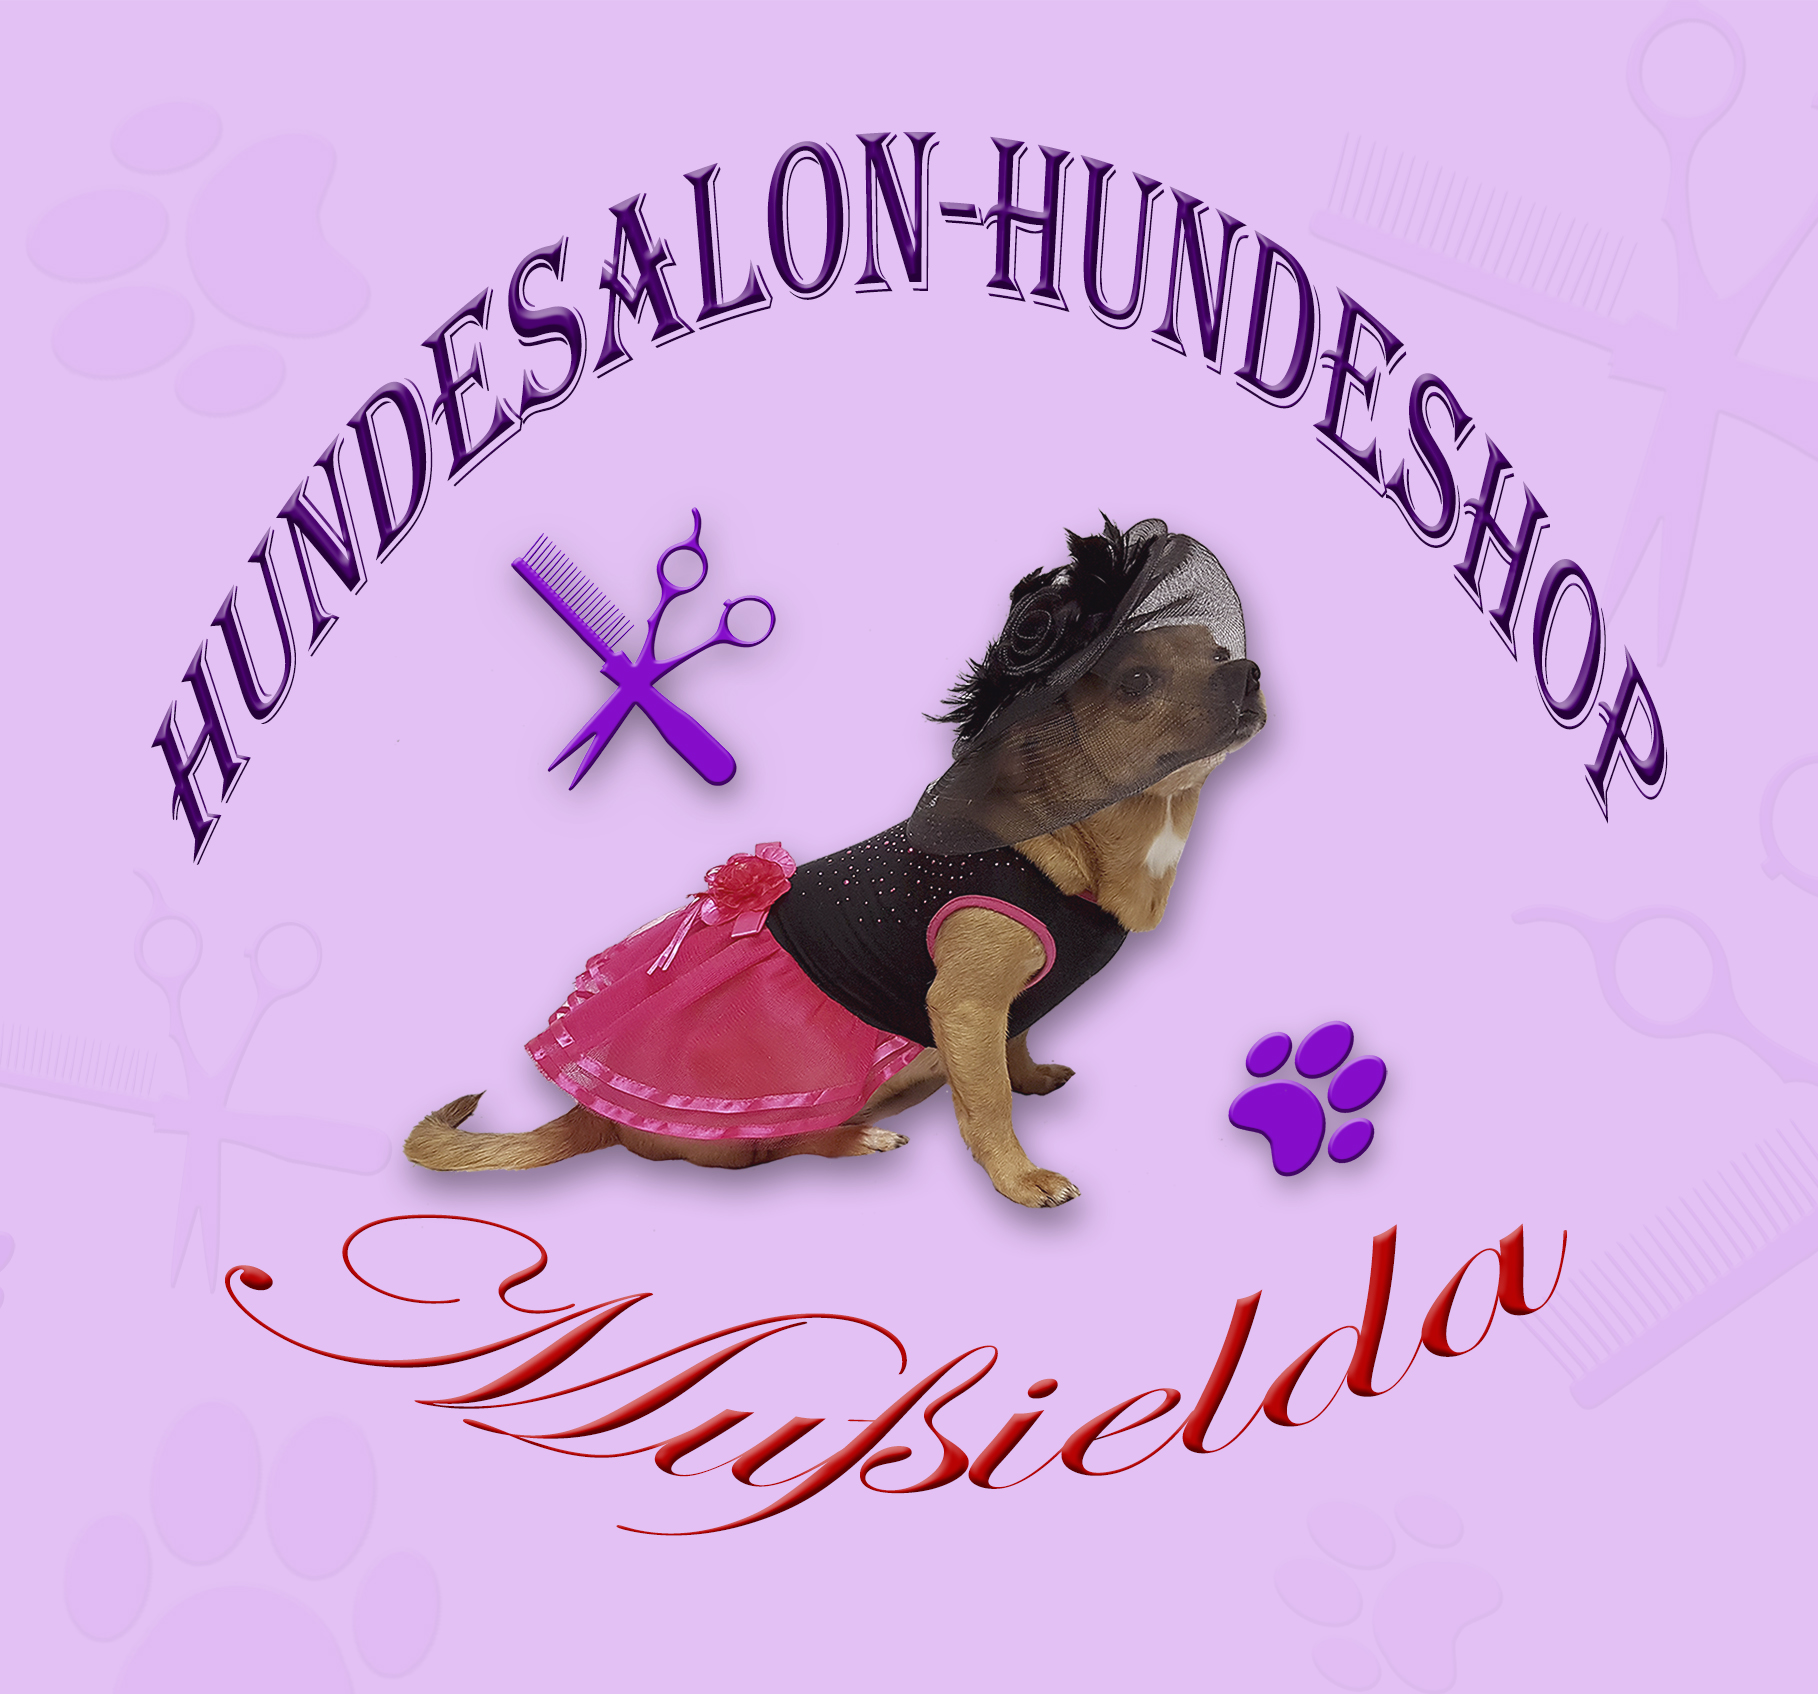 Logo von Hundeshop-Hundesalon Mußielda